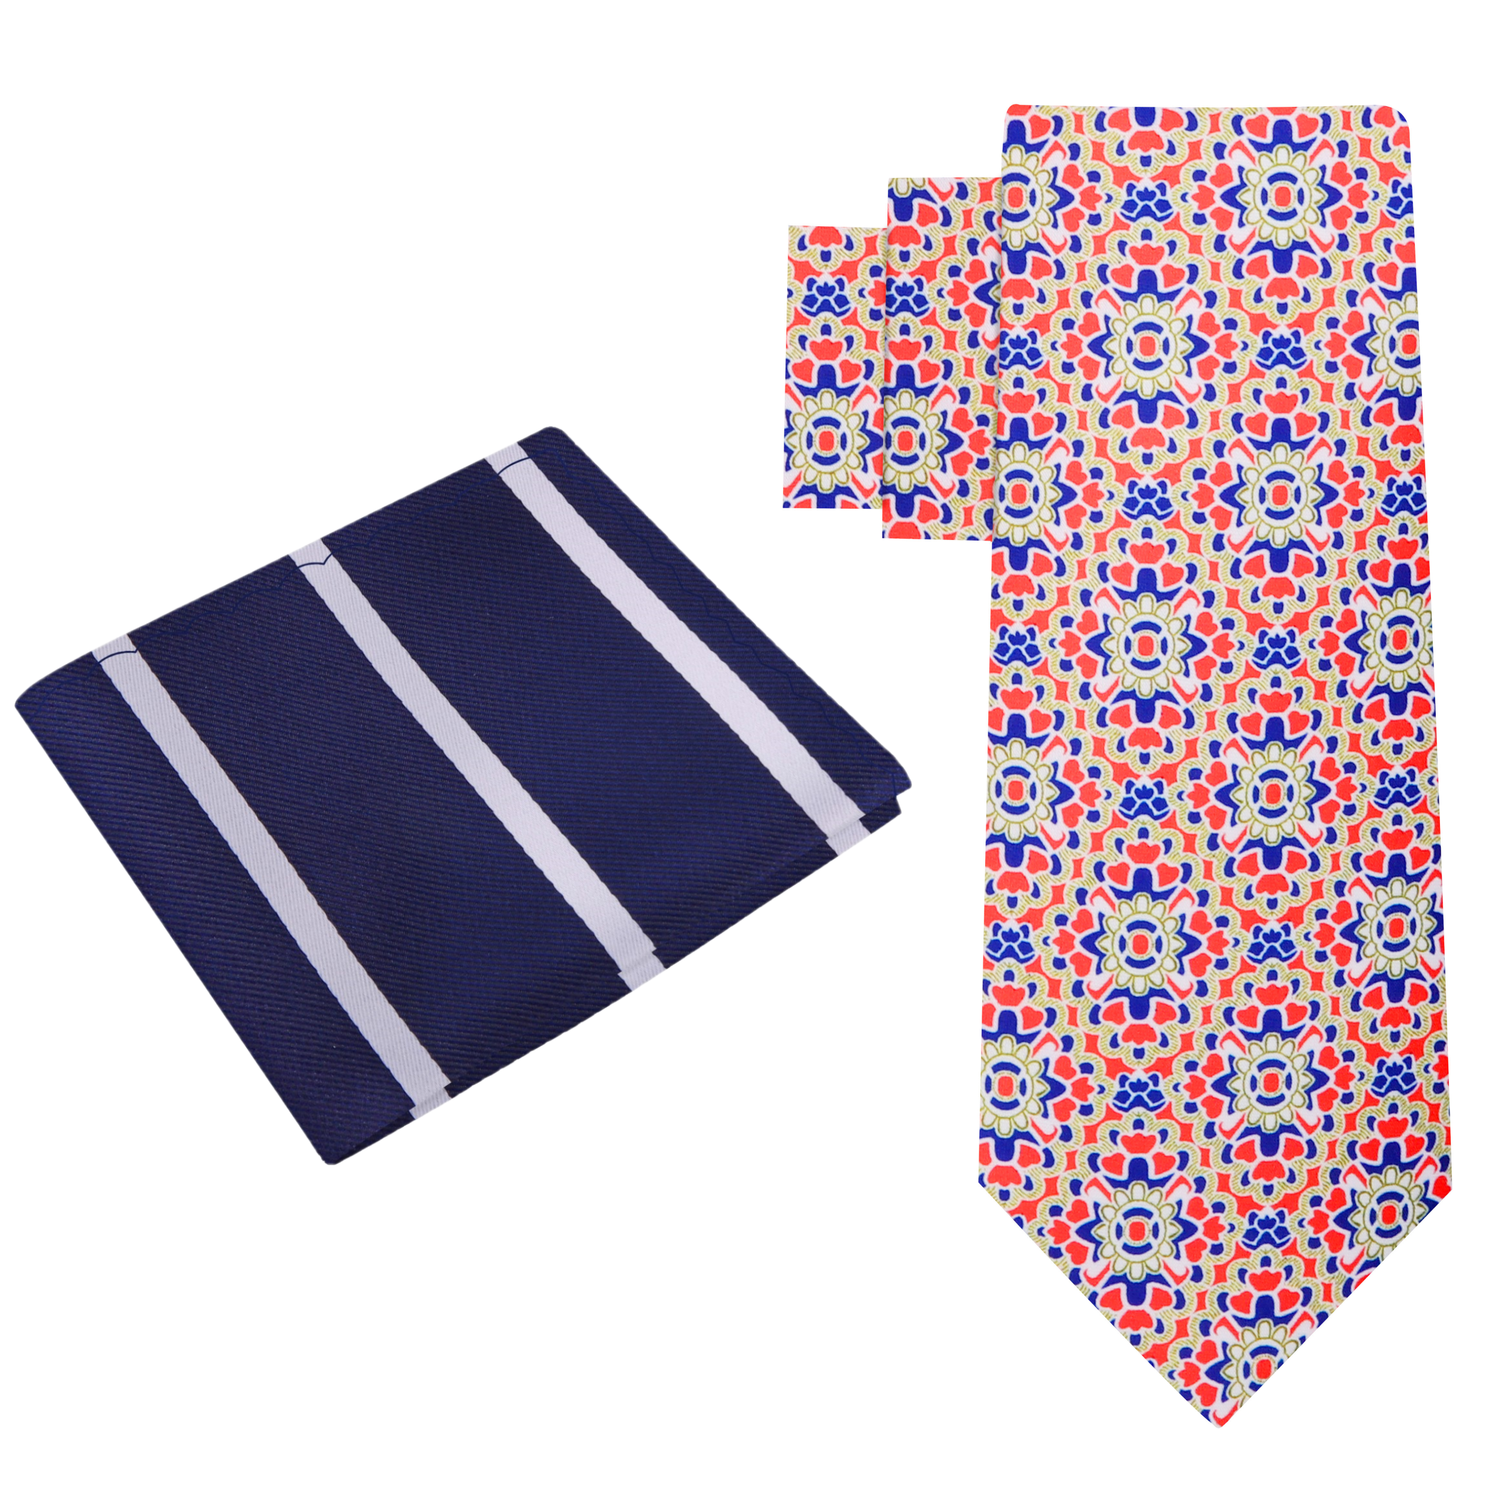 Alt View: Red, Blue, White Mosaic Necktie and Blue, White Stripe Square